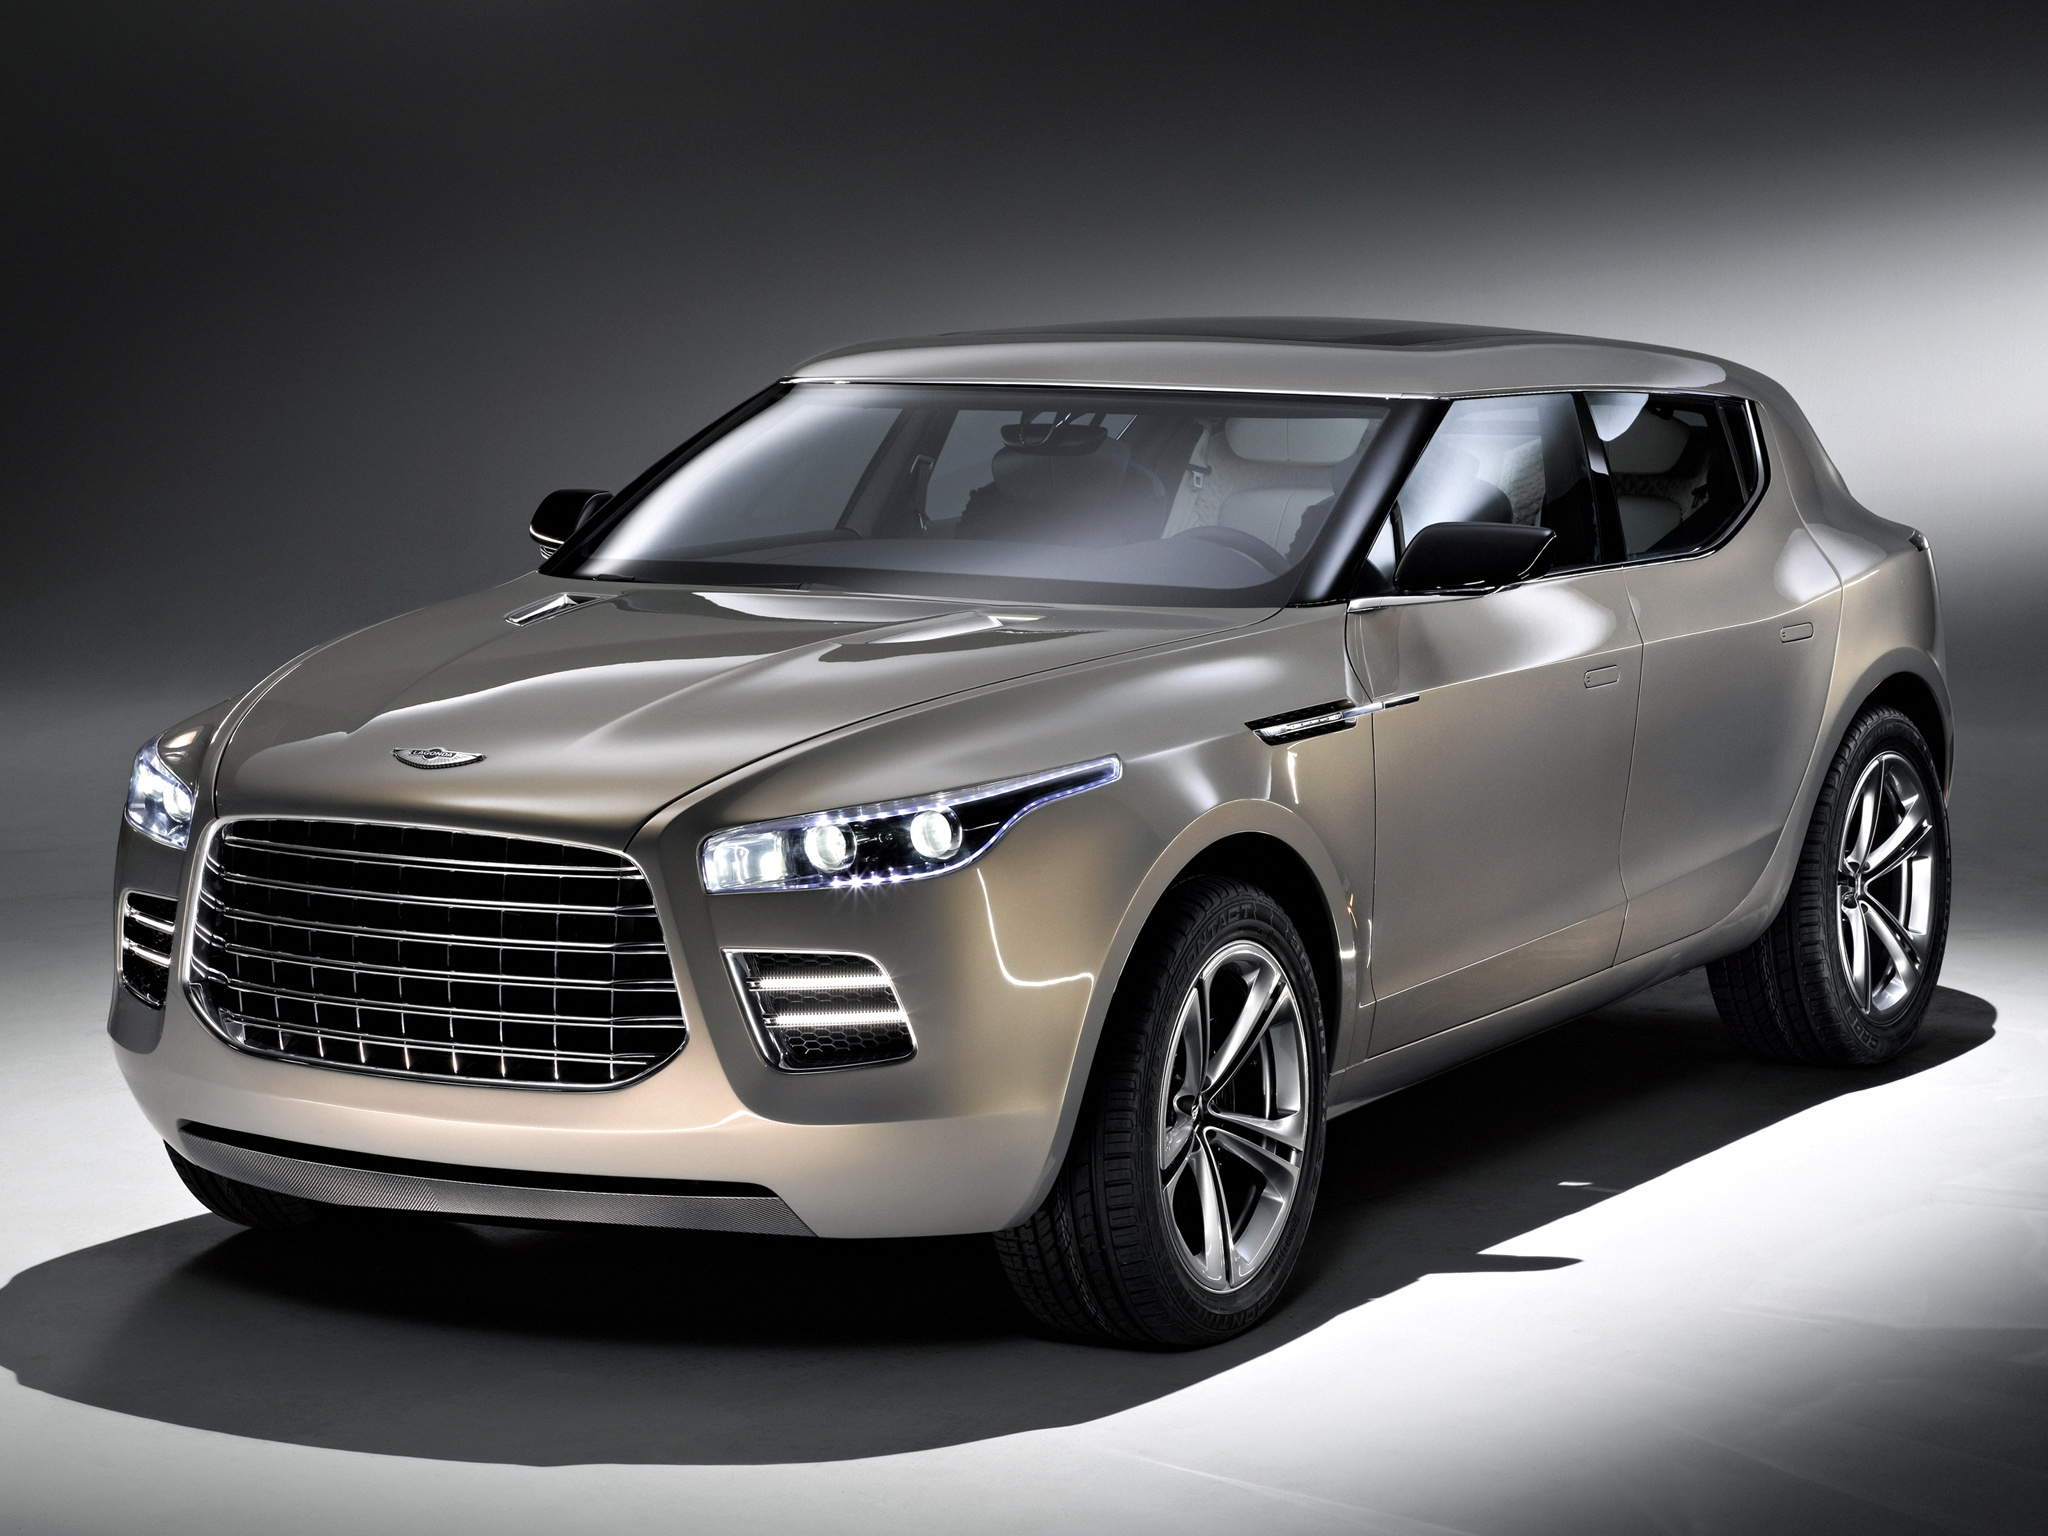 cars, lagonda, auto, aston martin, front view, style, 2009, metallic gray, grey metallic, concept car